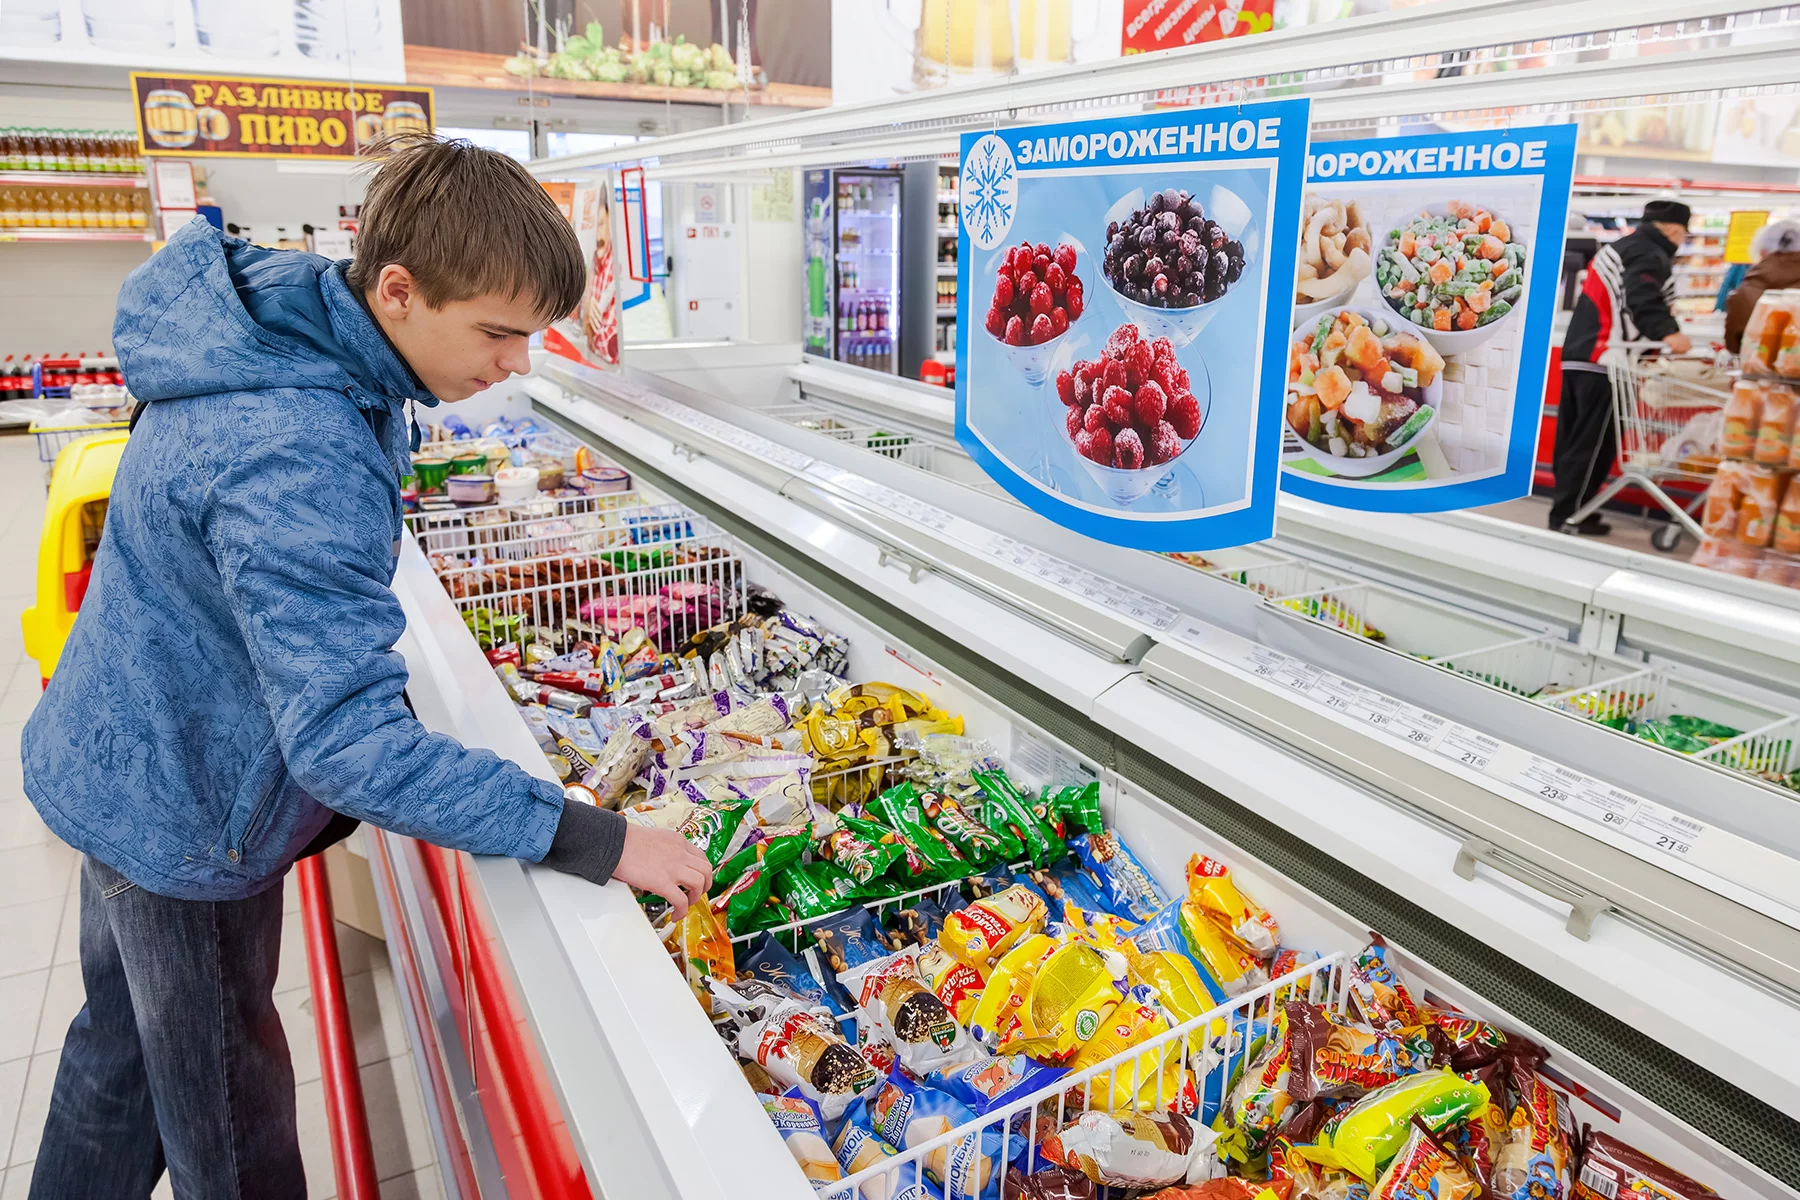 A boy choosing ice cream in a supermarket in Samara